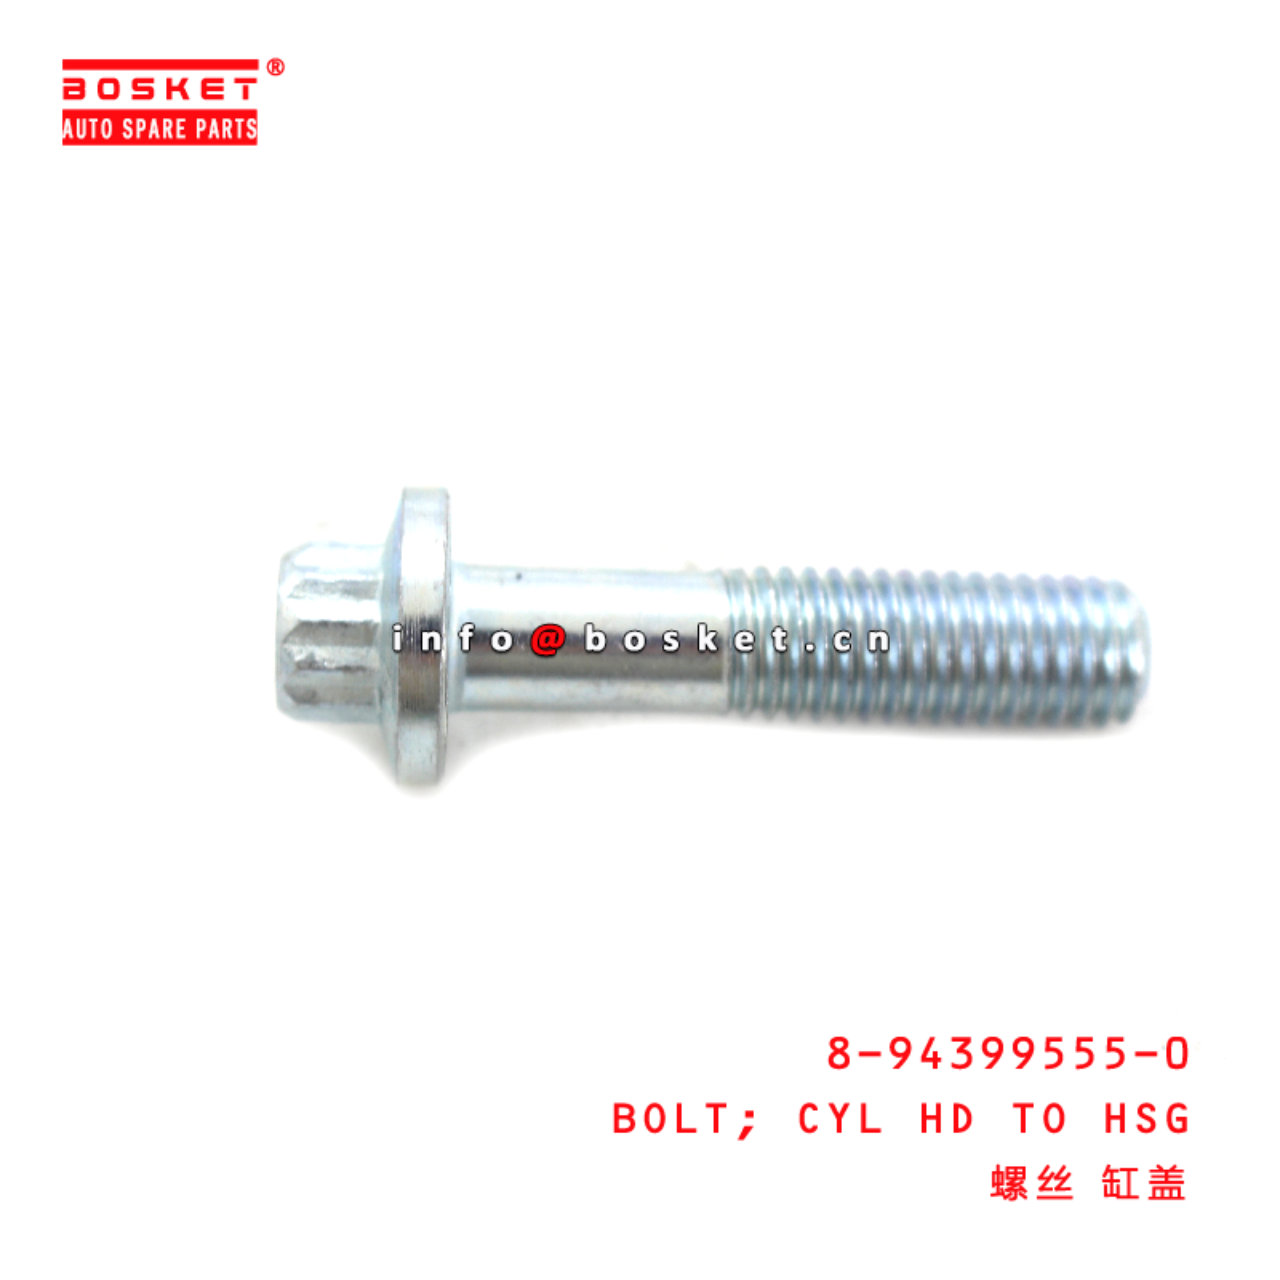 8-94399555-0 Cylinder Head To Housing Bolt suitable for ISUZU FVR34 6HK1 4HK1 4HF1 8943995550